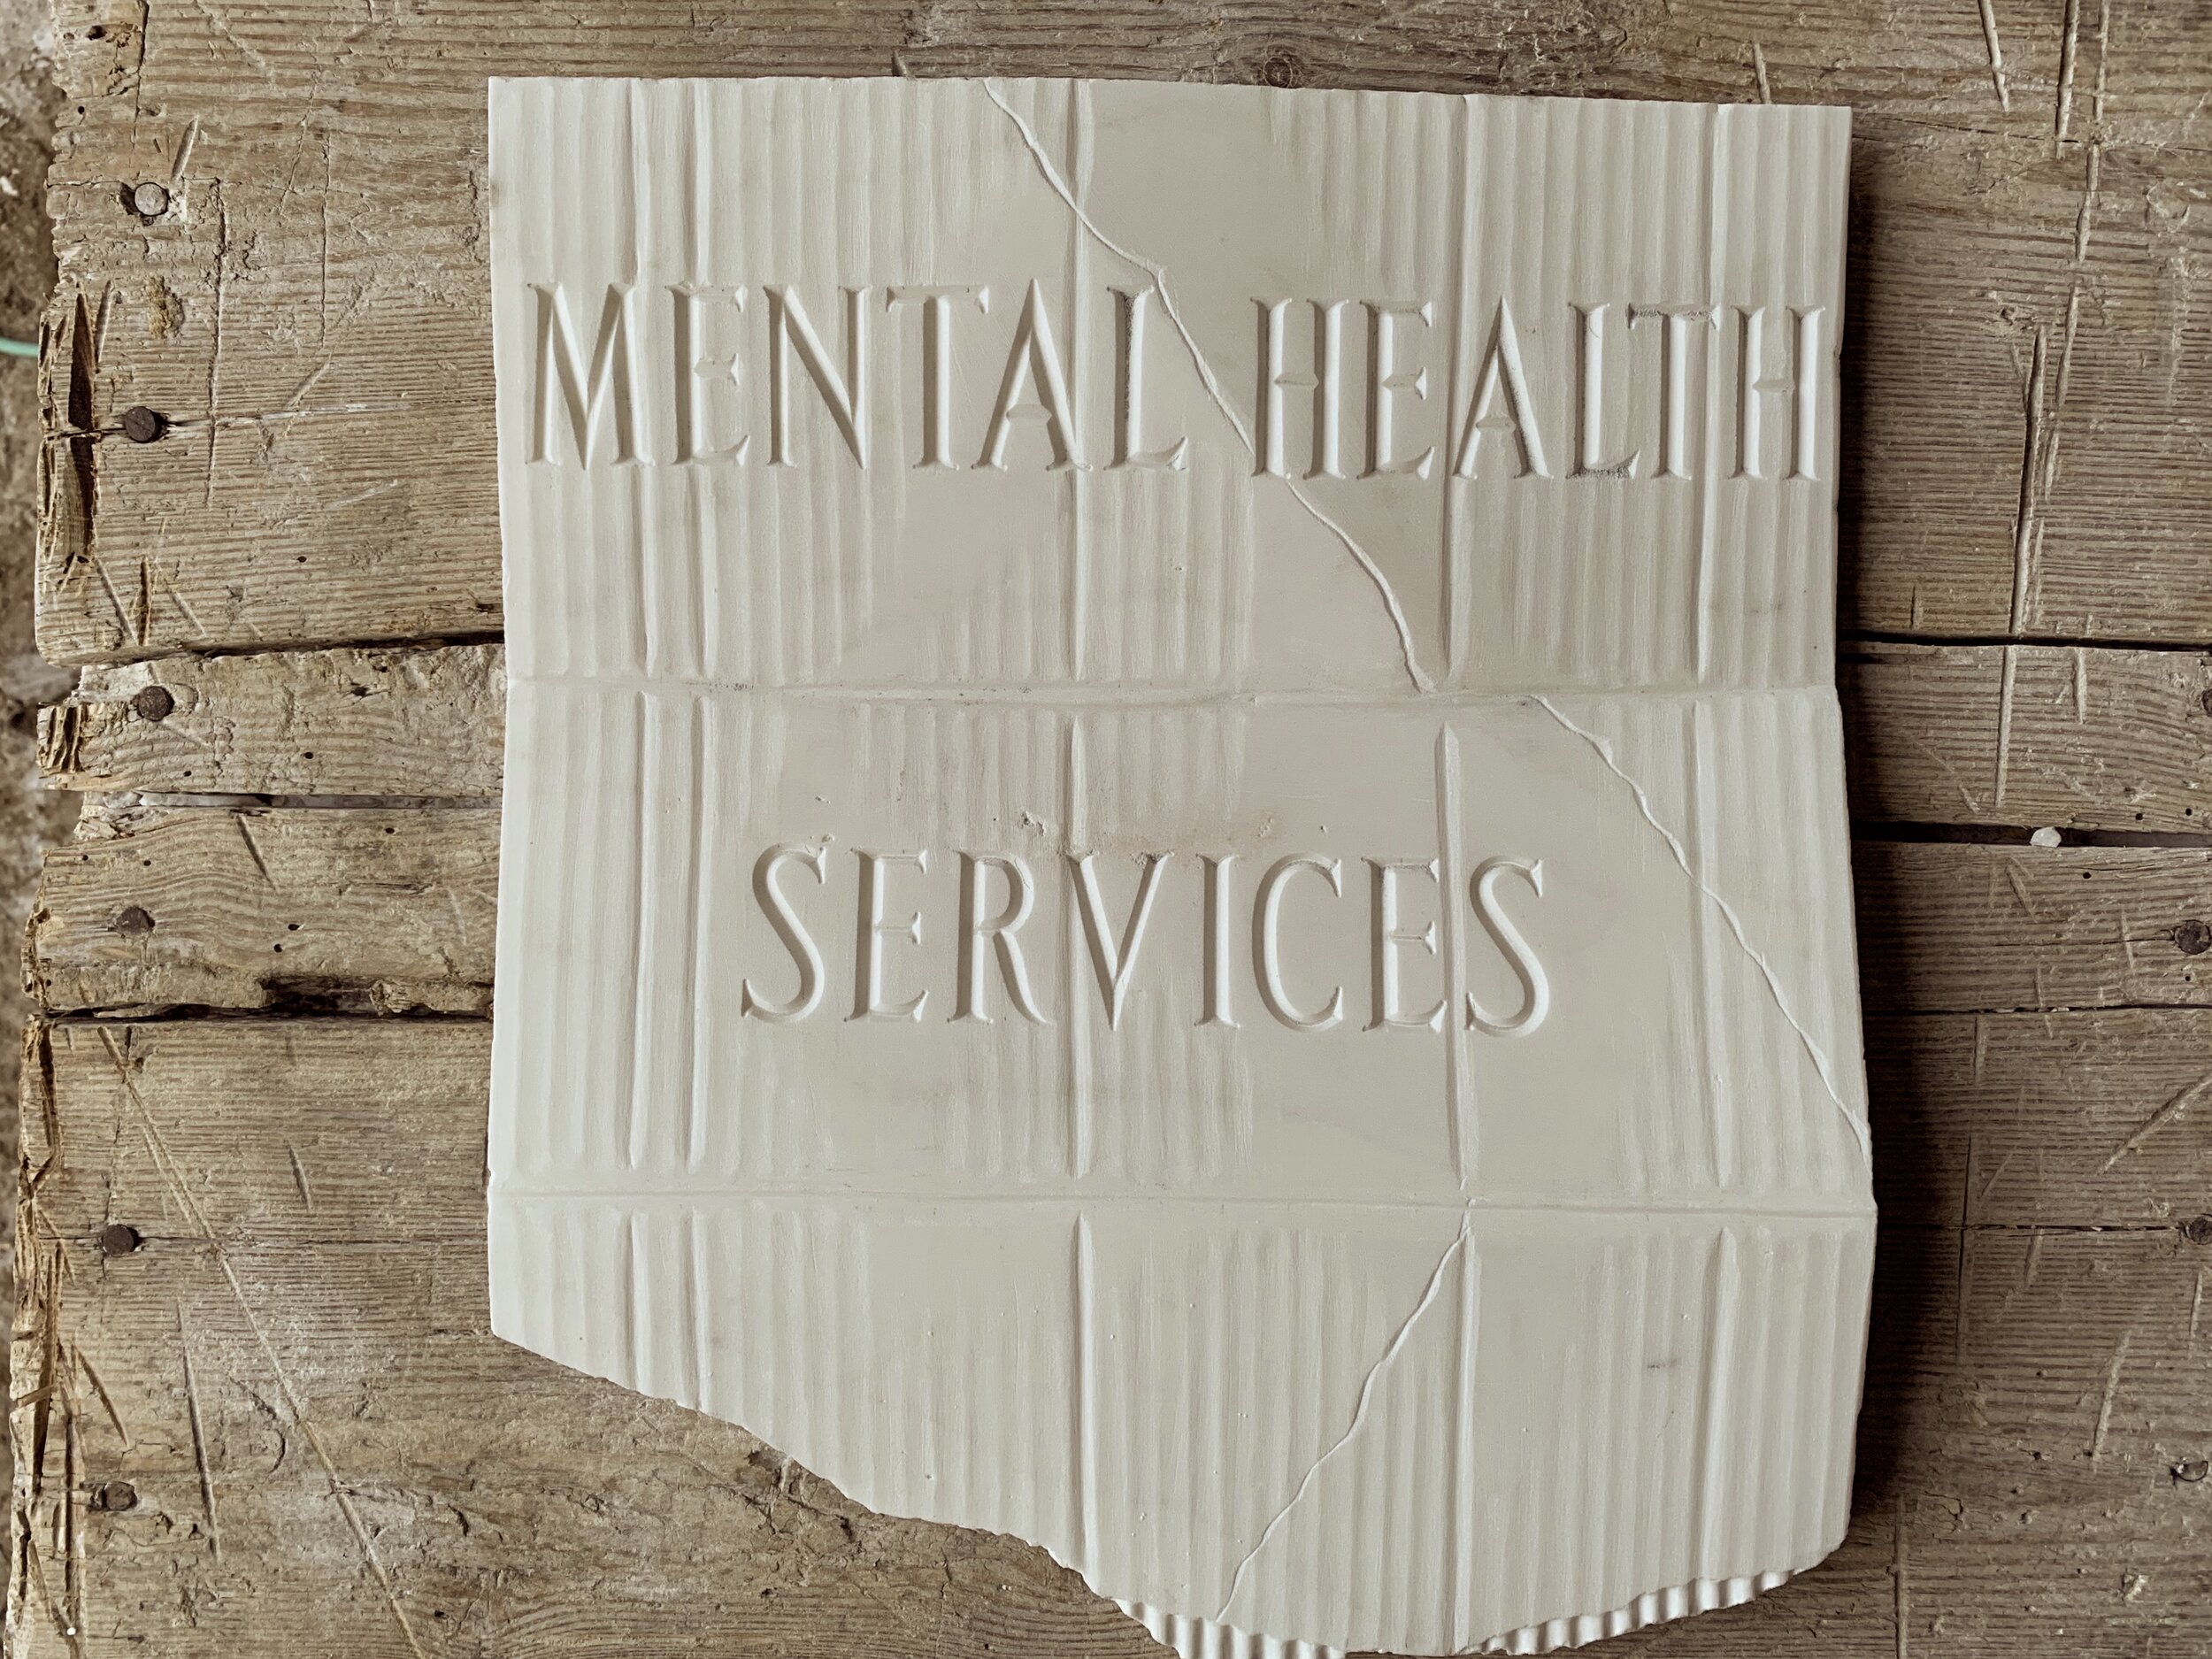 Mental Health Services.jpg